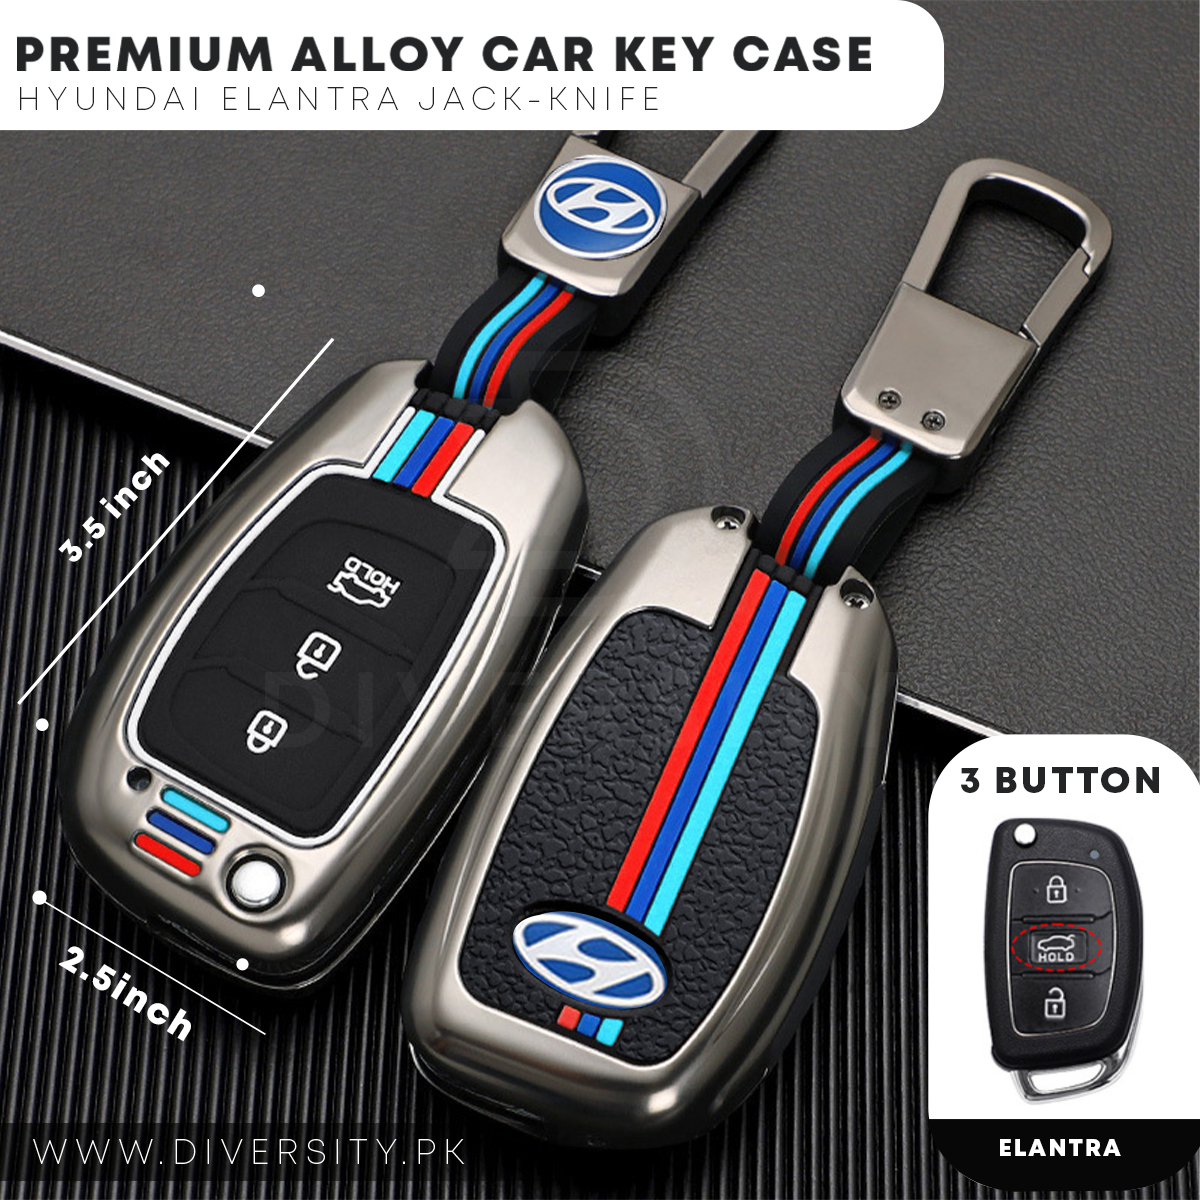 Premium Alloy Car Key Case